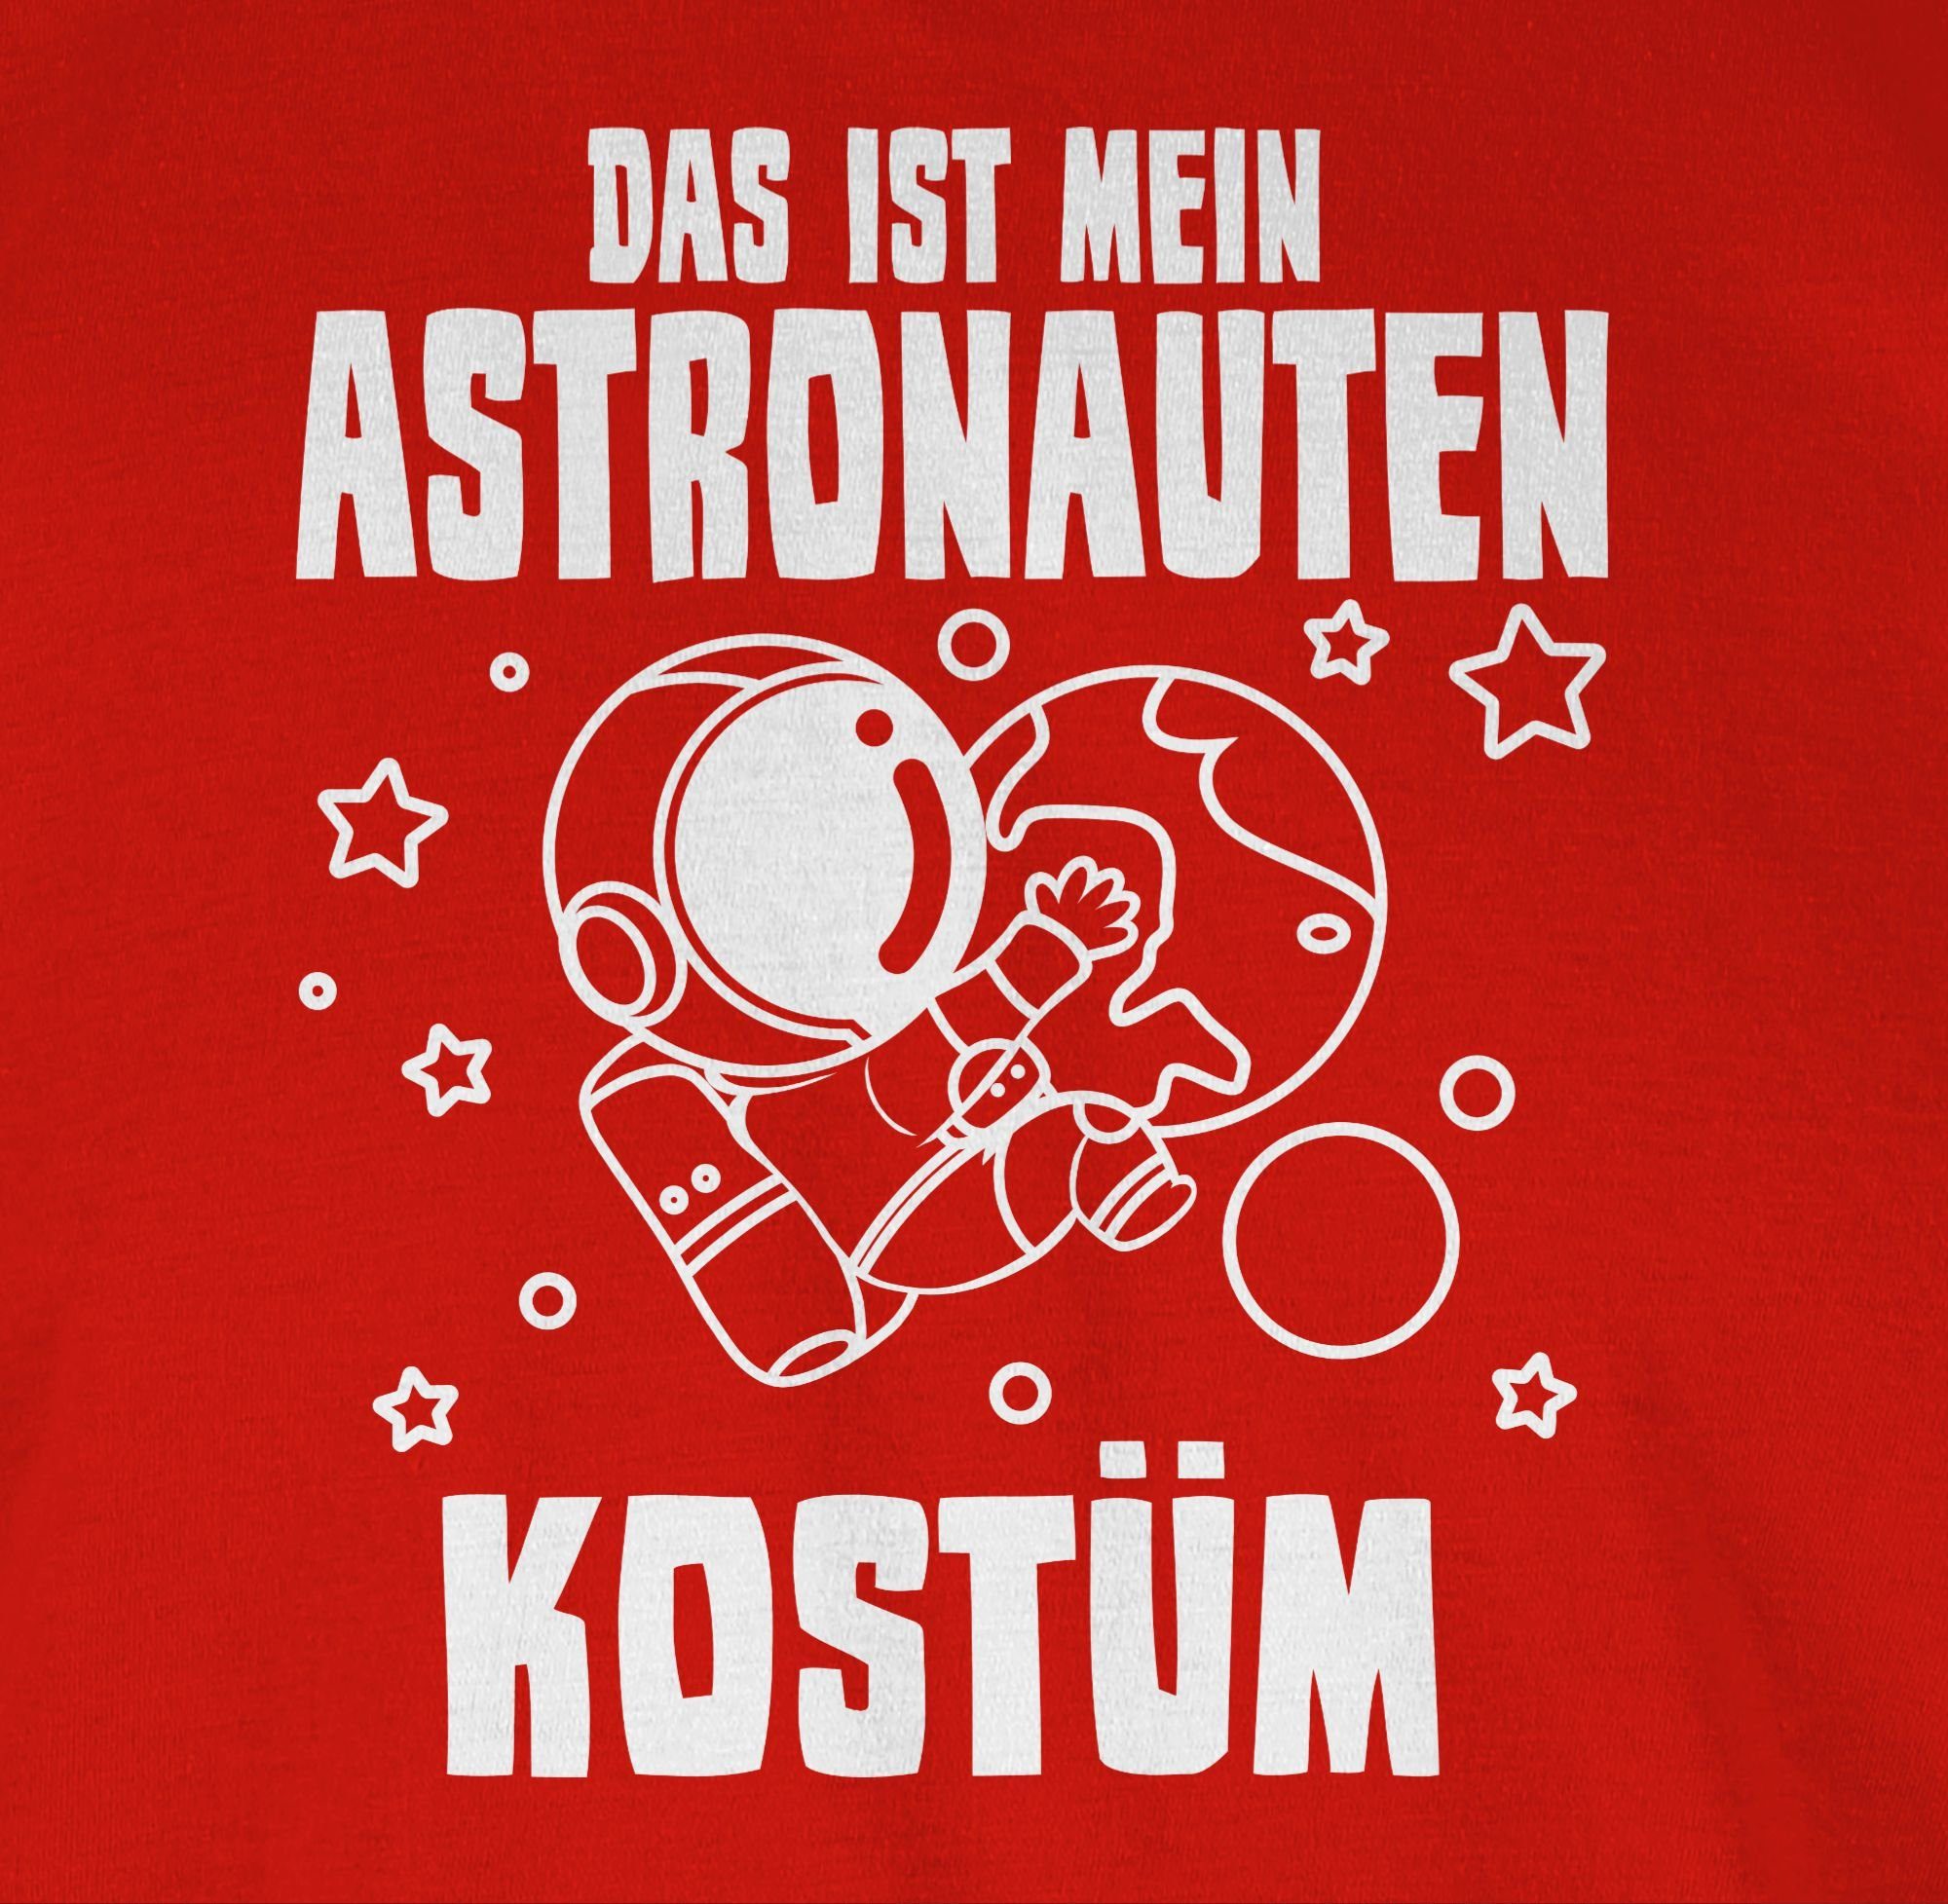 - Das Karneval Shirtracer Kostüm ist Rot Weltraum Astronaut Astronautenkostüm mein T-Shirt 3 Astronauten Outfit